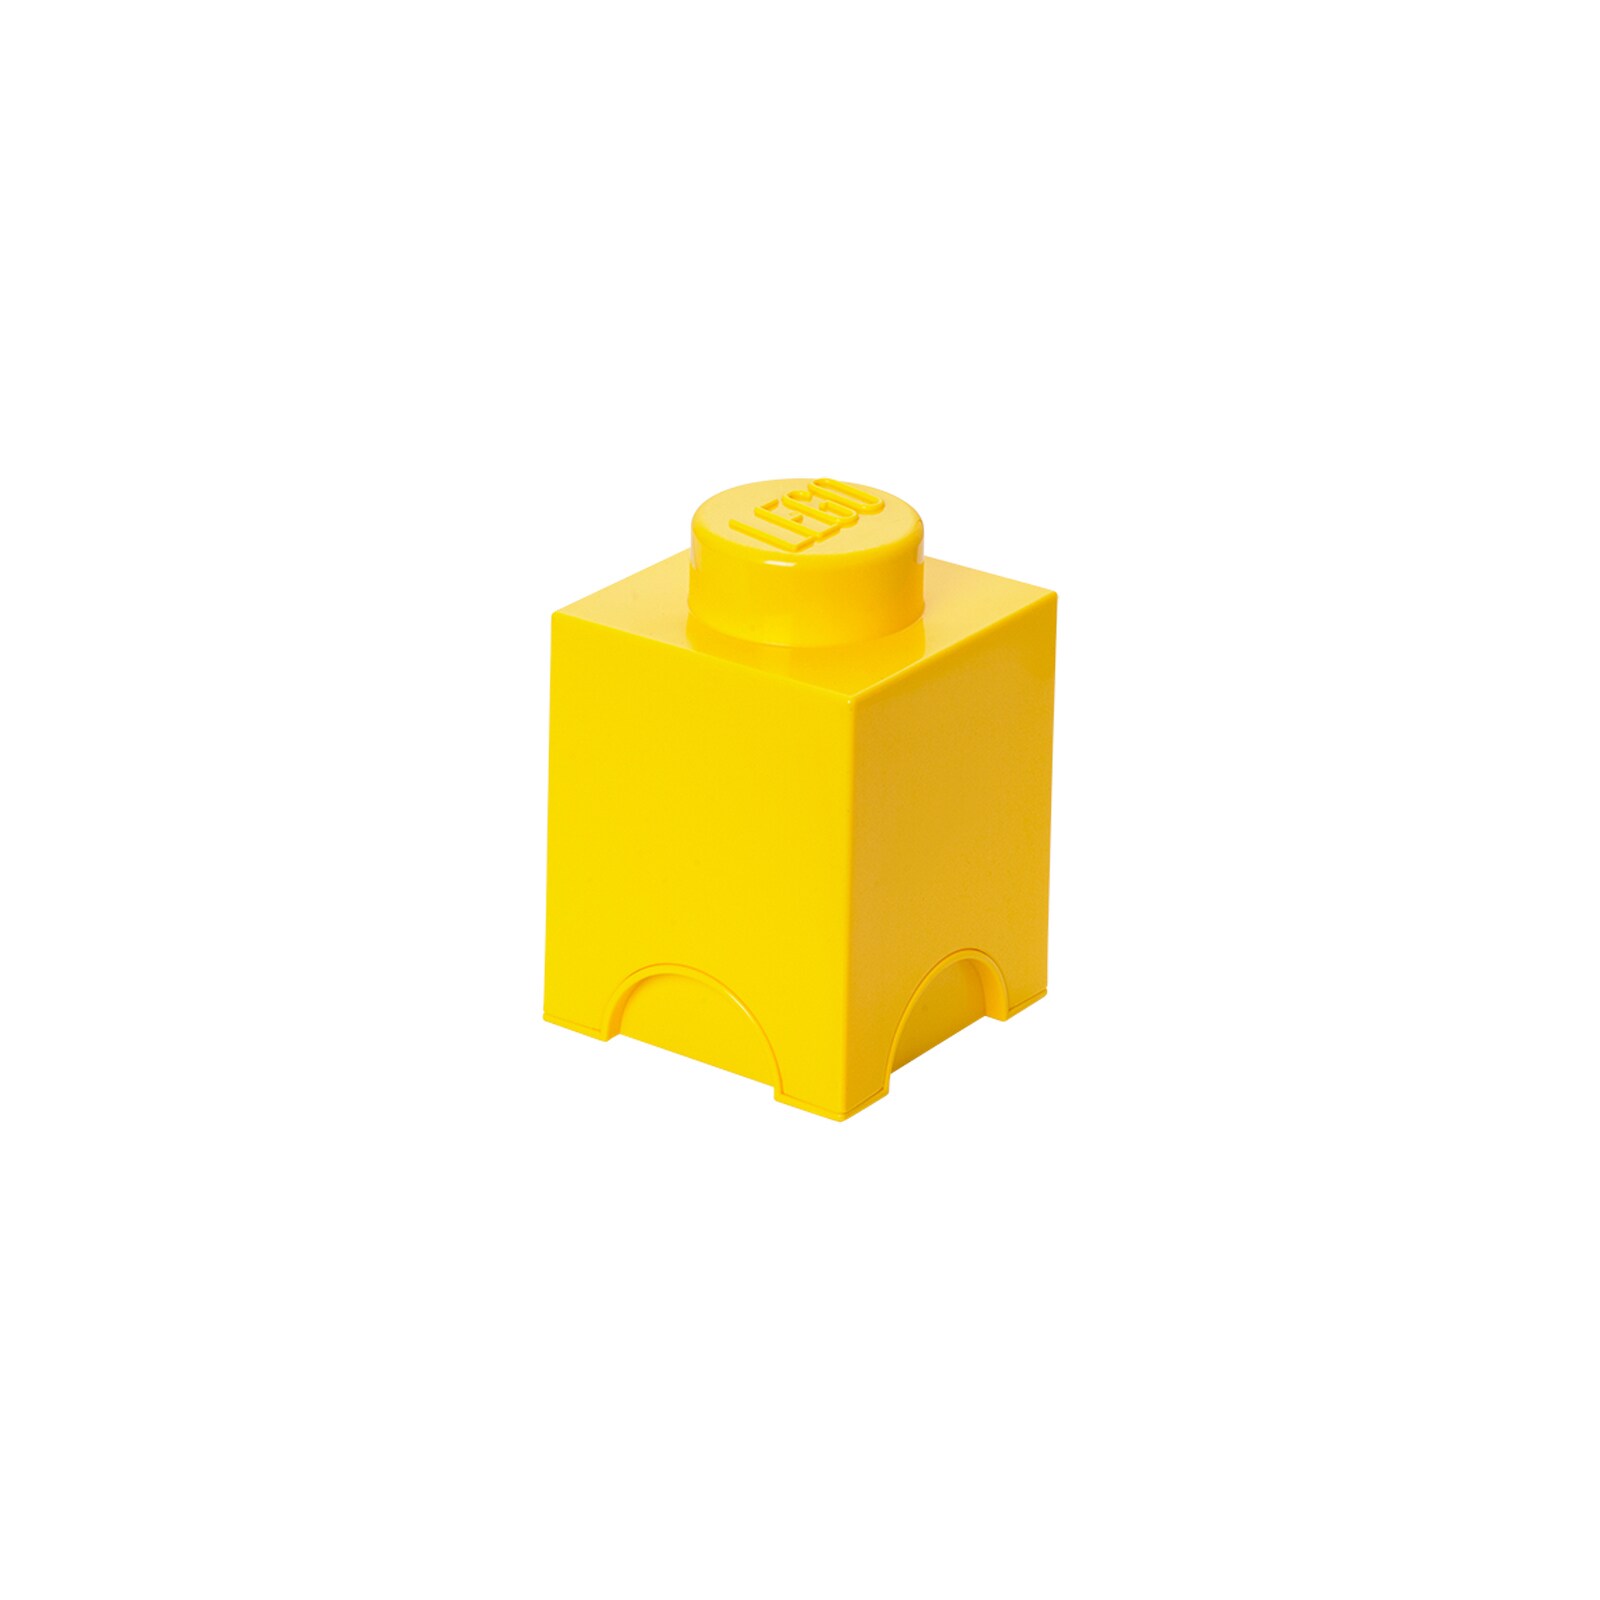 LEGO Yellow Storage Brick 1   17809696 Big